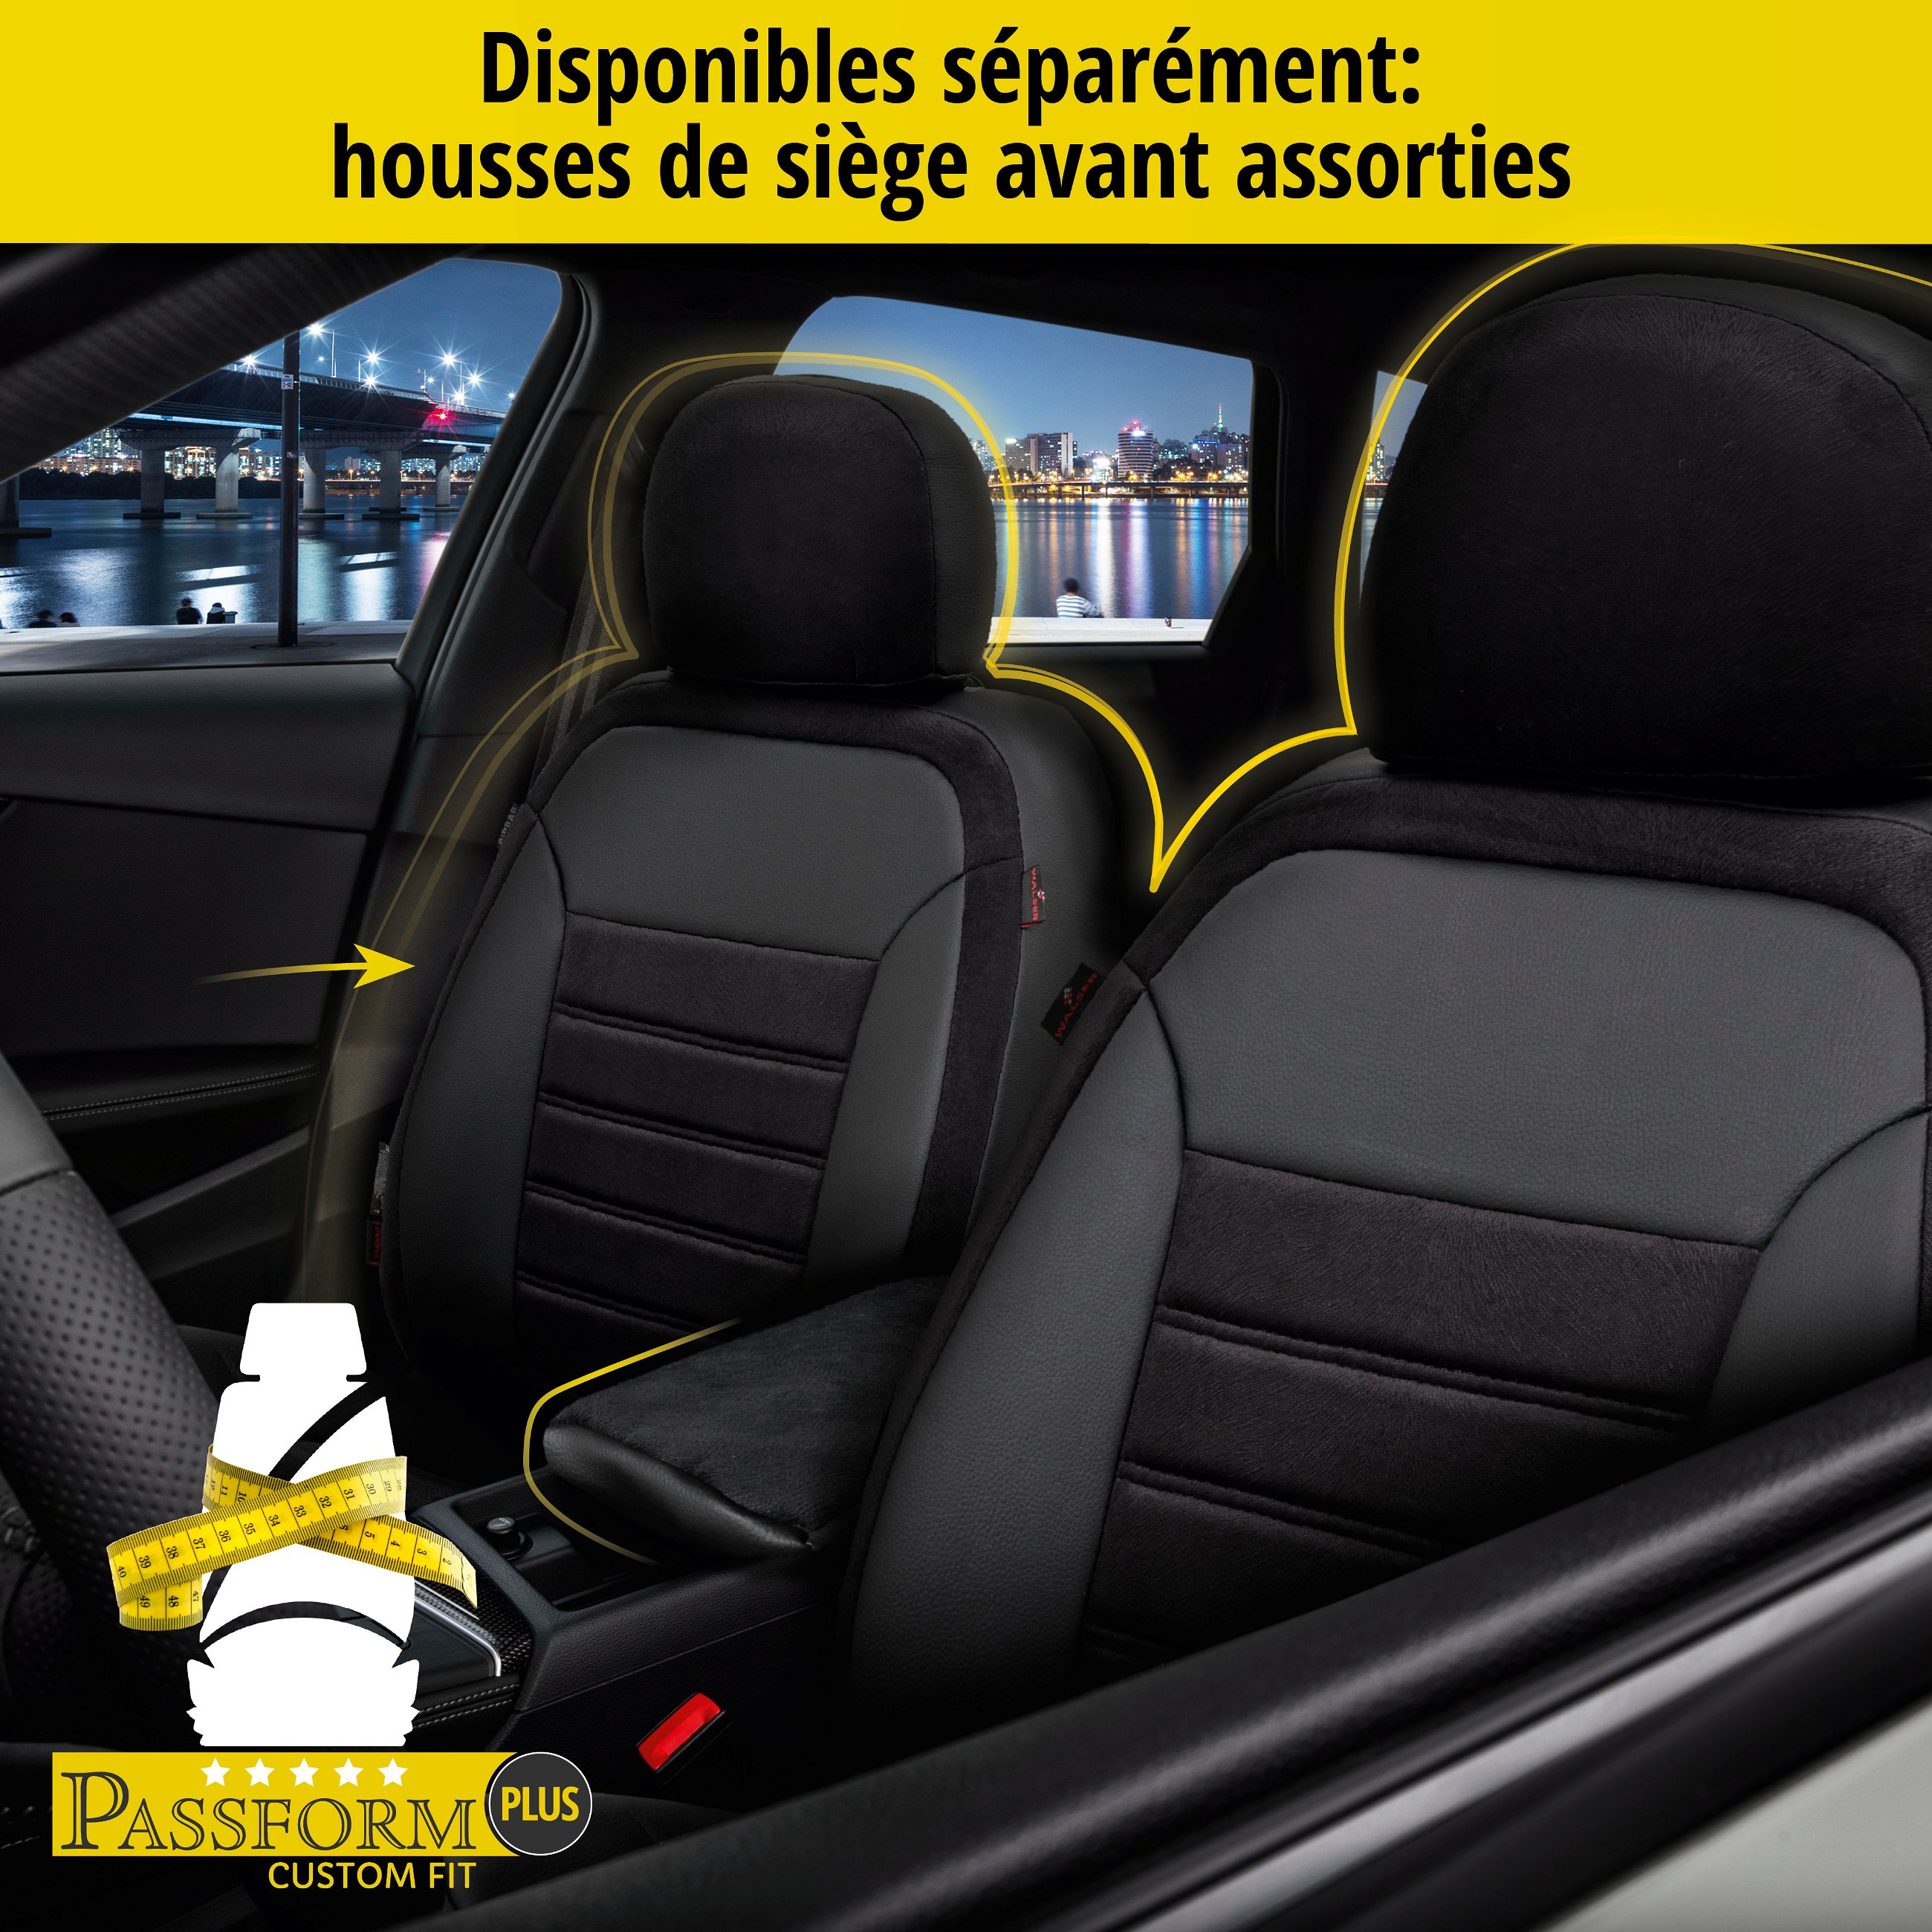 Housse de siège Bari pour Renault Kadjar (HA, HL) 06/2015-auj., 1 housse de siège arrière pour sièges normaux